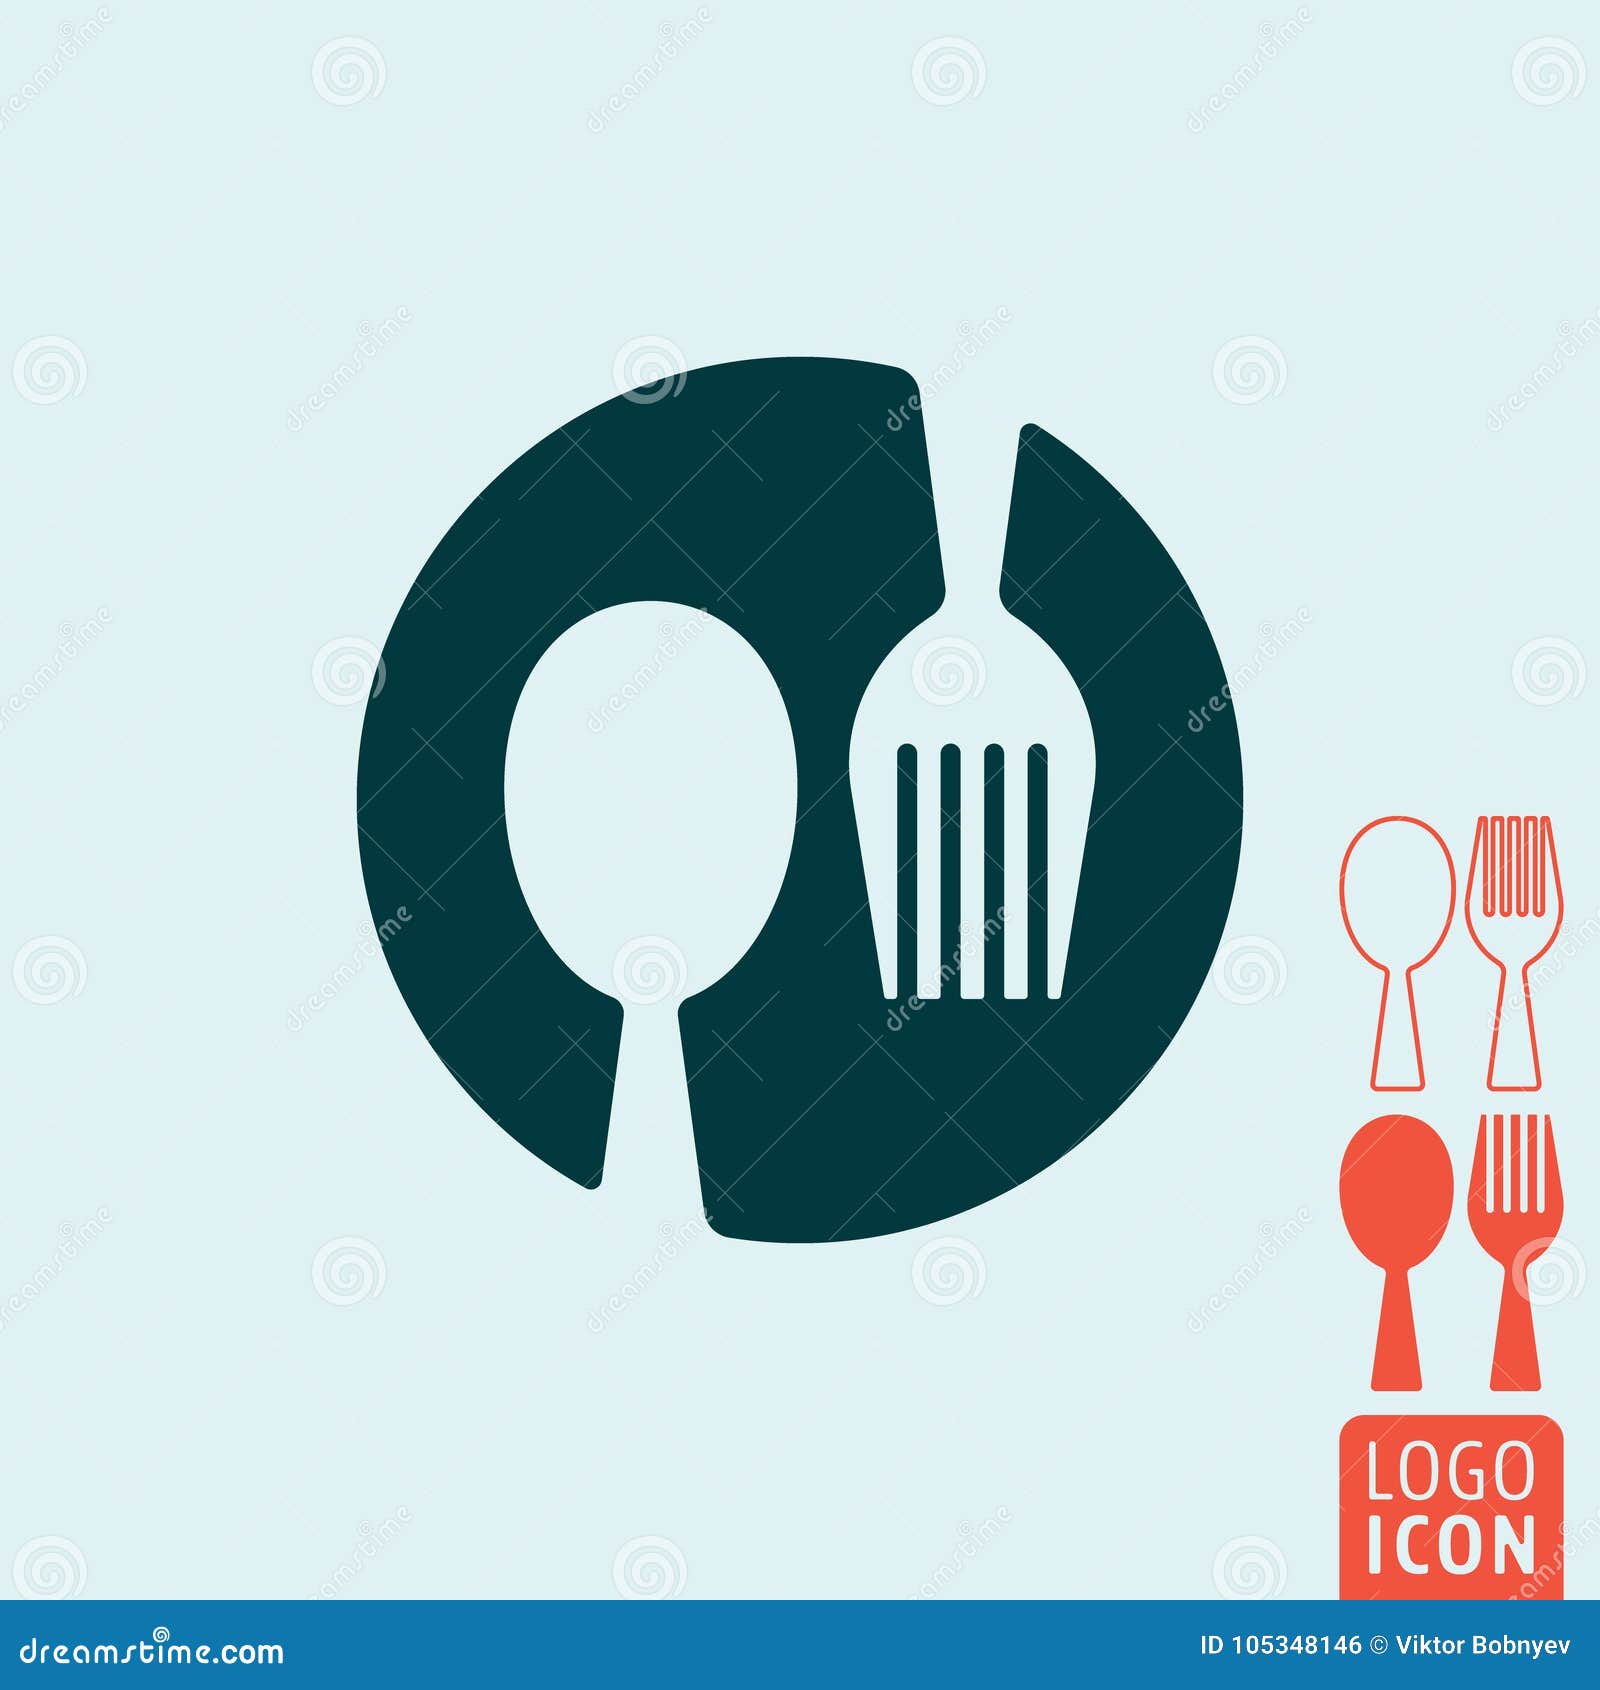 https://thumbs.dreamstime.com/z/spoon-fork-icon-cafe-restaurant-symbol-vector-illustration-105348146.jpg